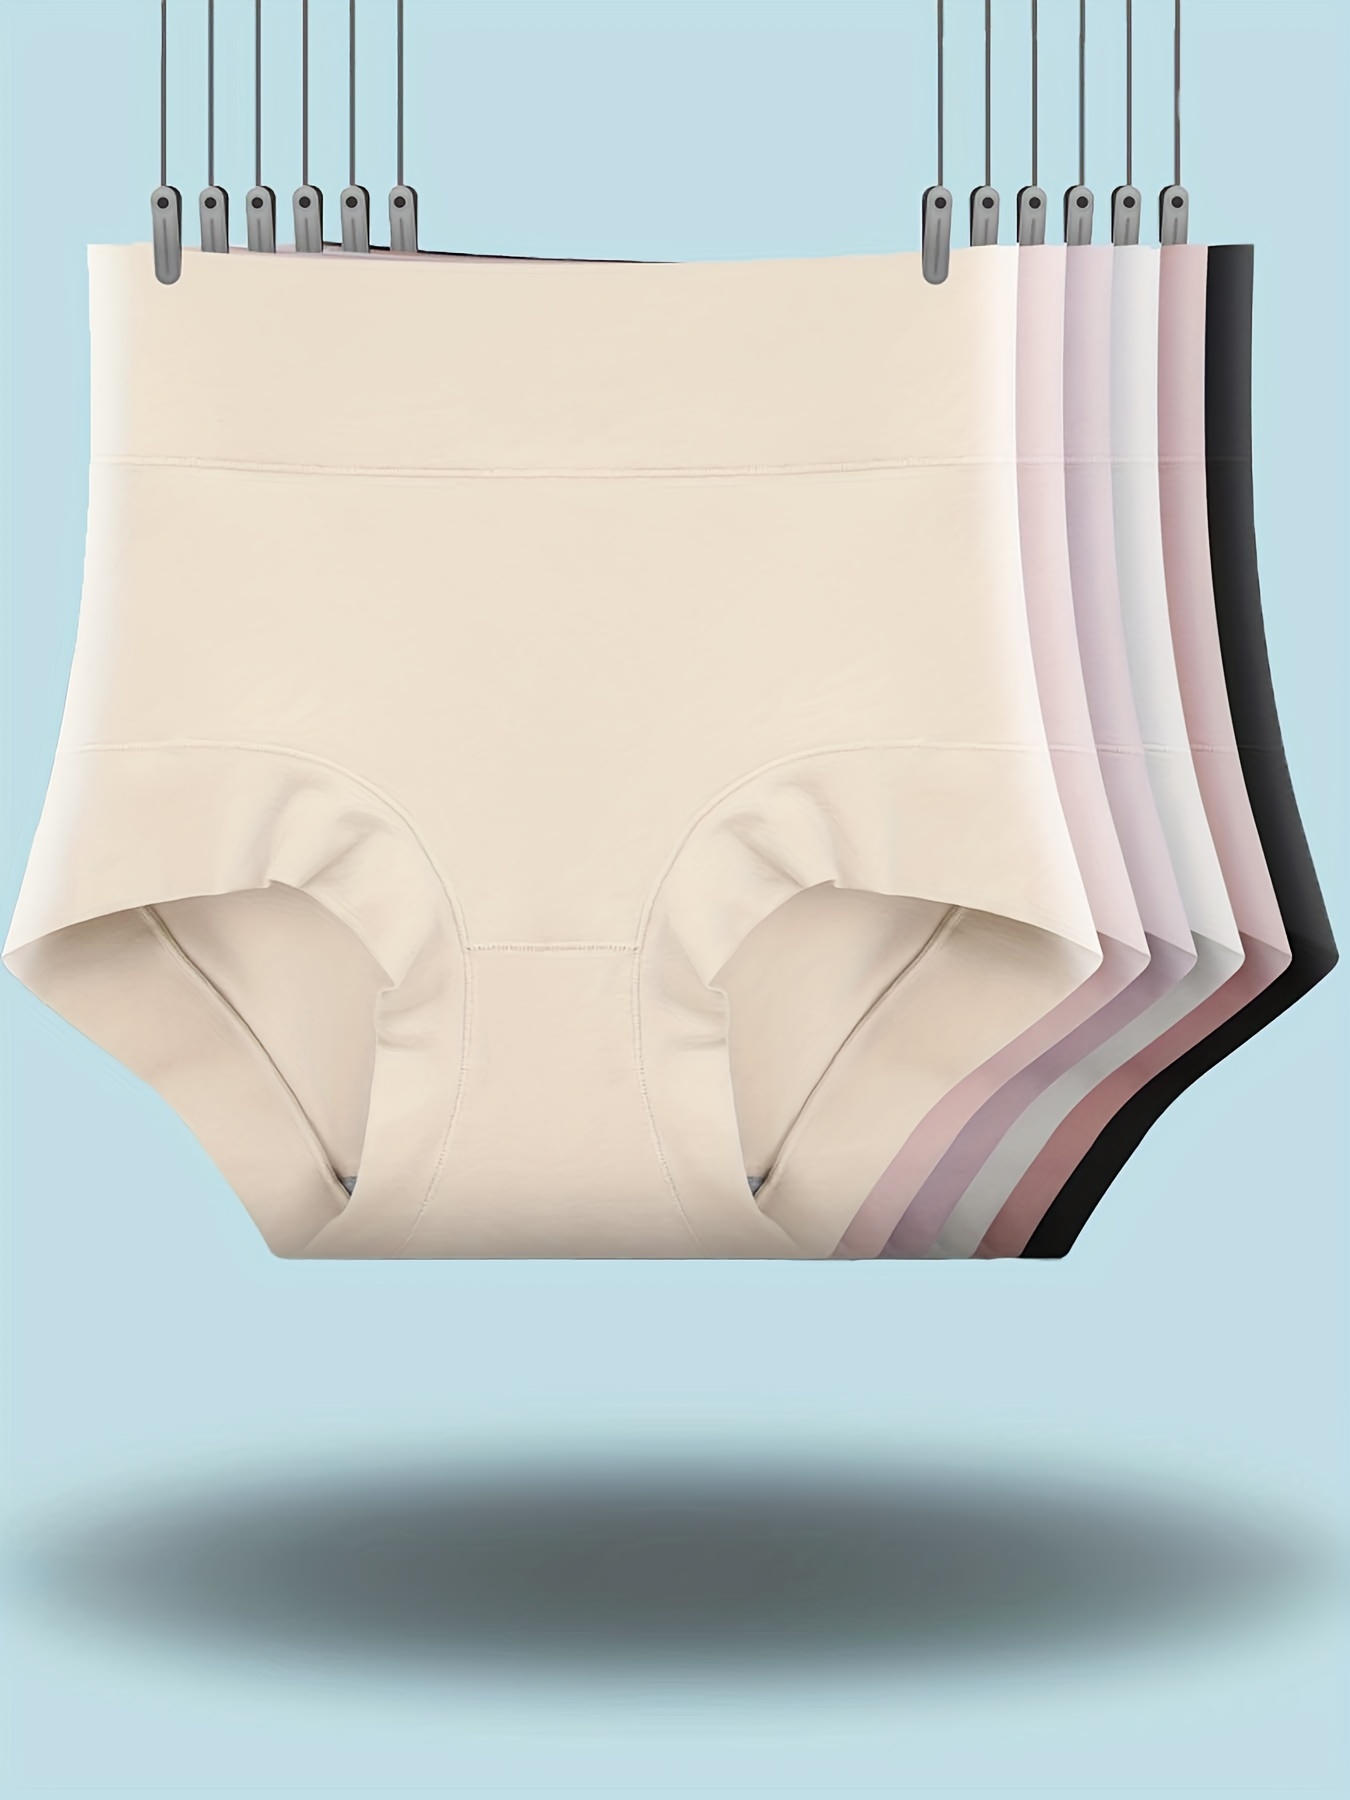 FallSweet No Show High Waist Briefs Underwear for Women